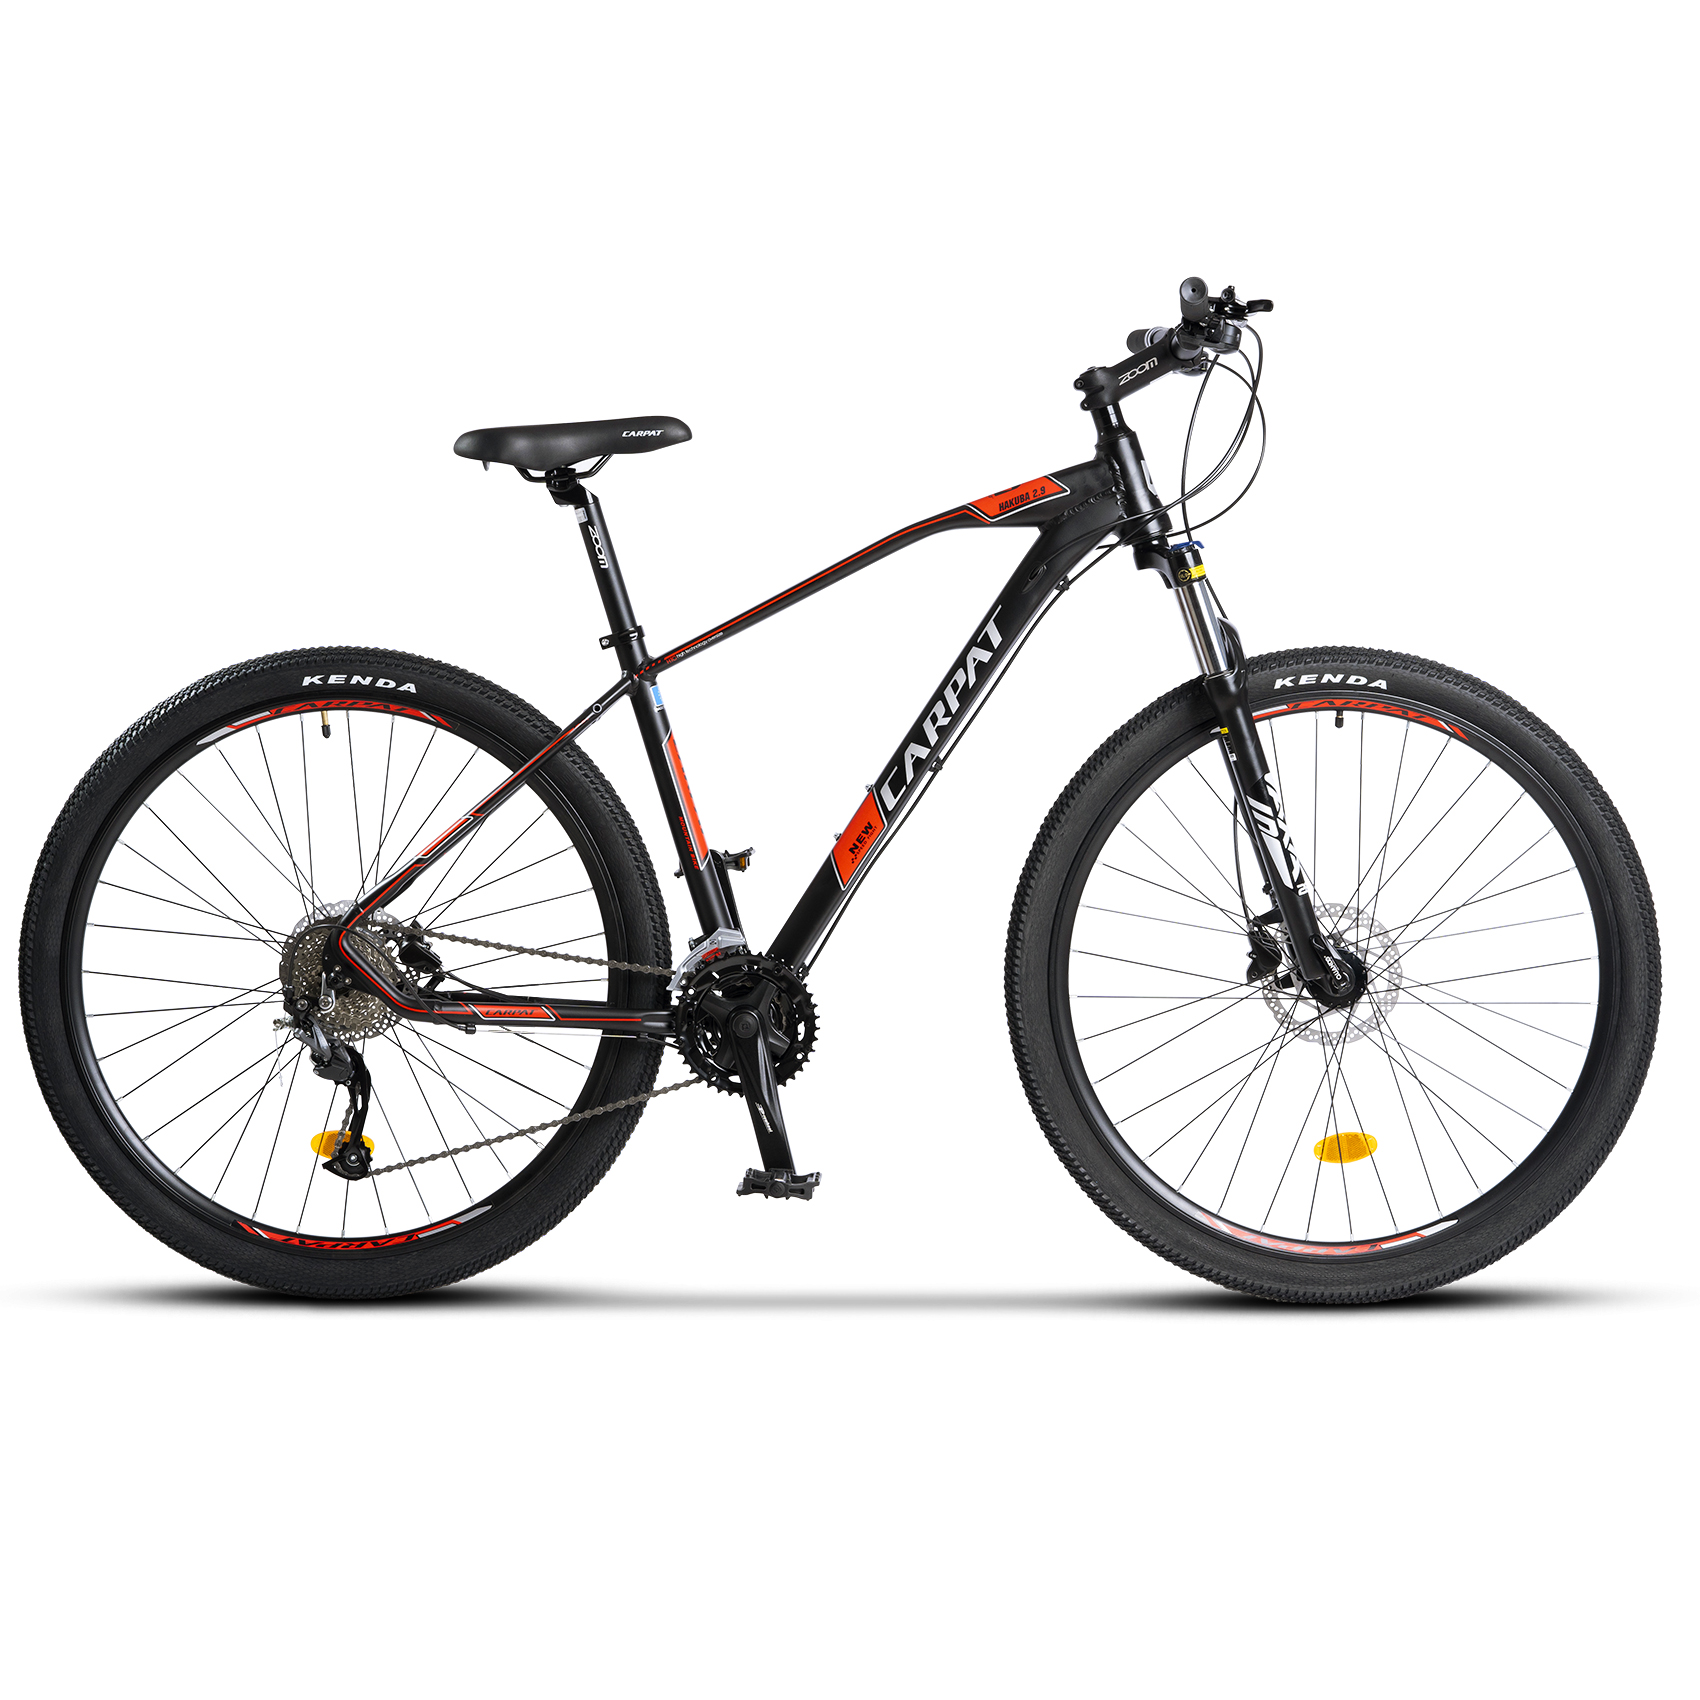 PROMO BICICLETE - Bicicleta Hidraulica MTB-HT Carpat Hakuba C2989H 29", Negru/Rosu, https:carpatsport.ro